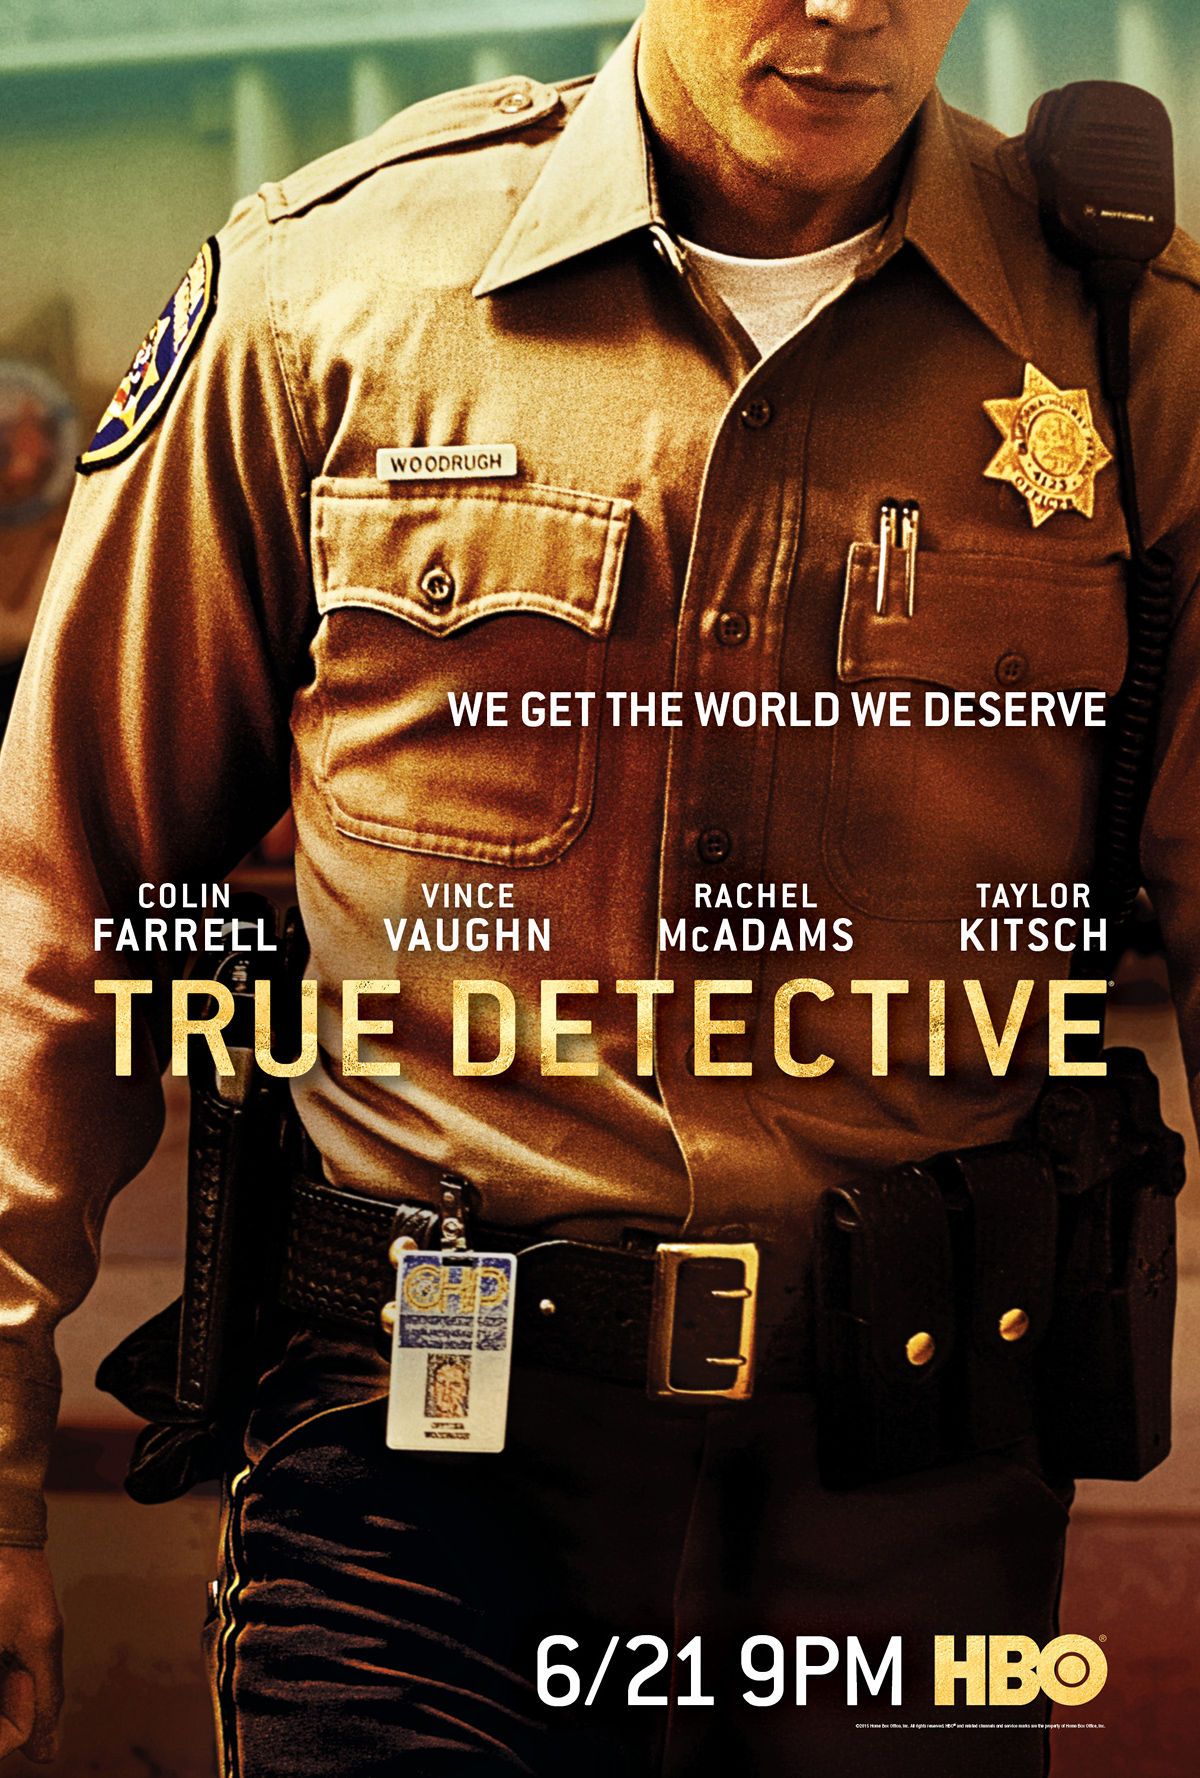 True Detective Season 2 - Taylor Kitsch Character Poster